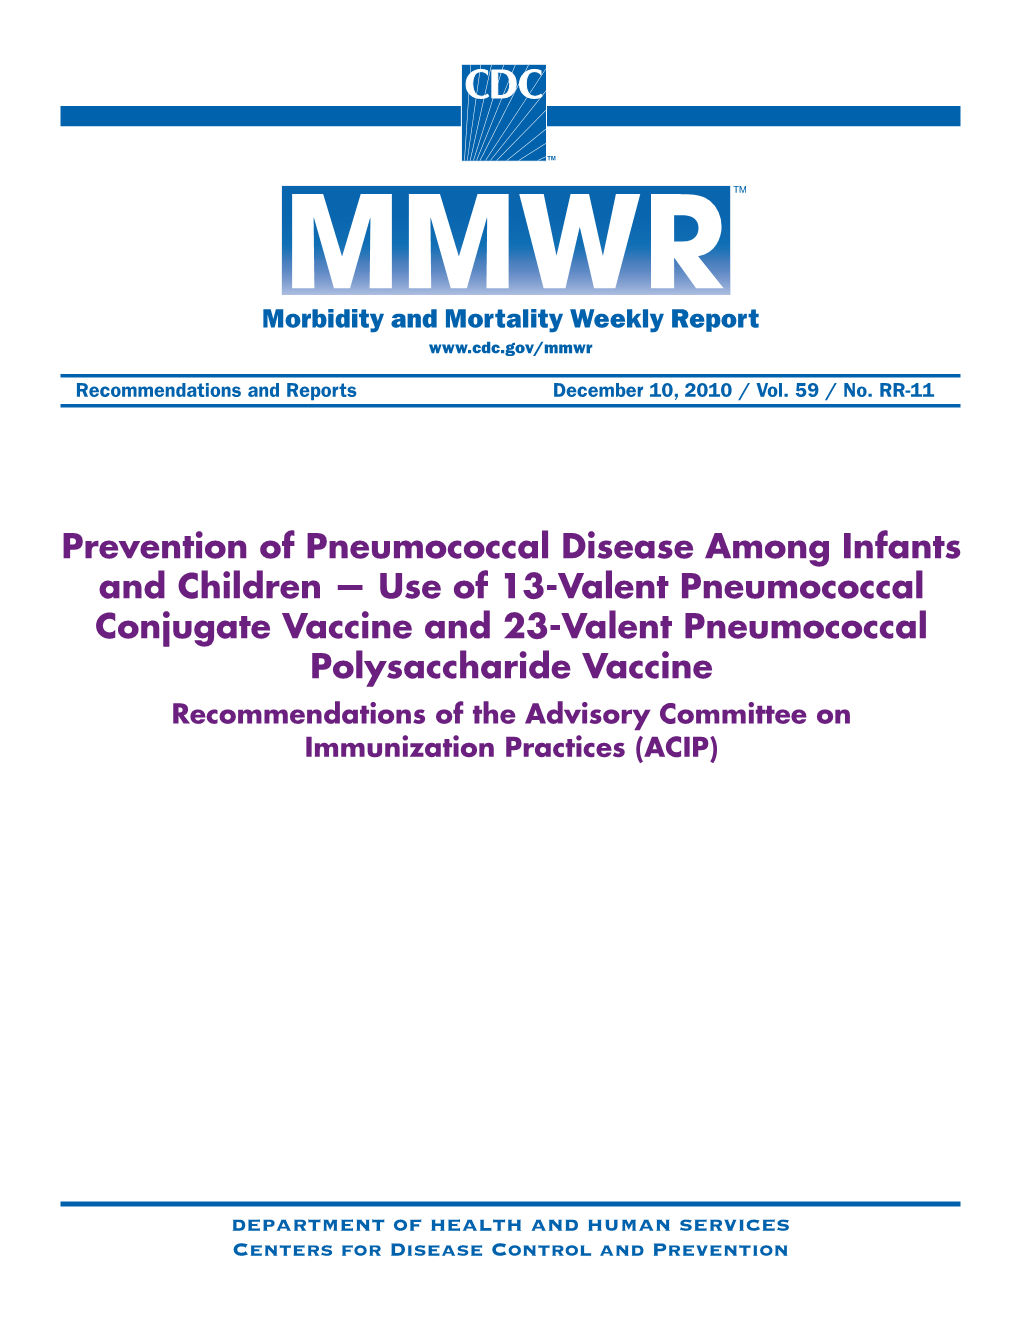 Use of 13-Valent Pneumococcal Conjugate Vaccine